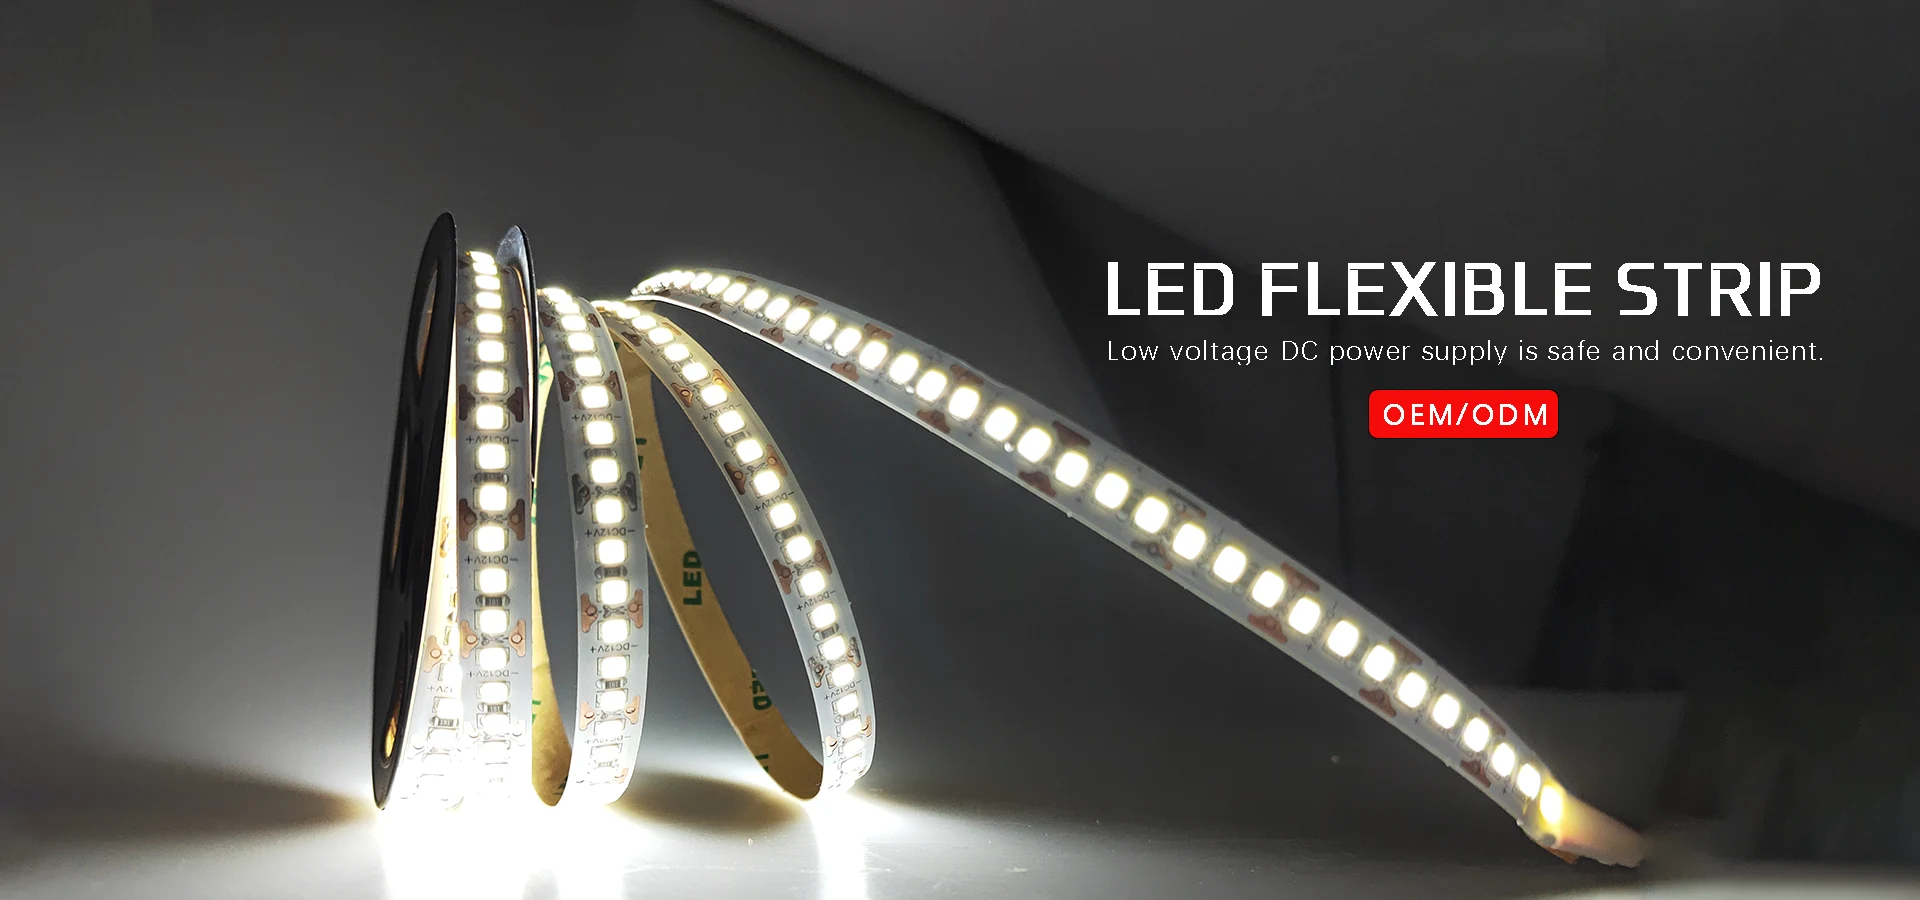 LED Flexible Strip Supplier